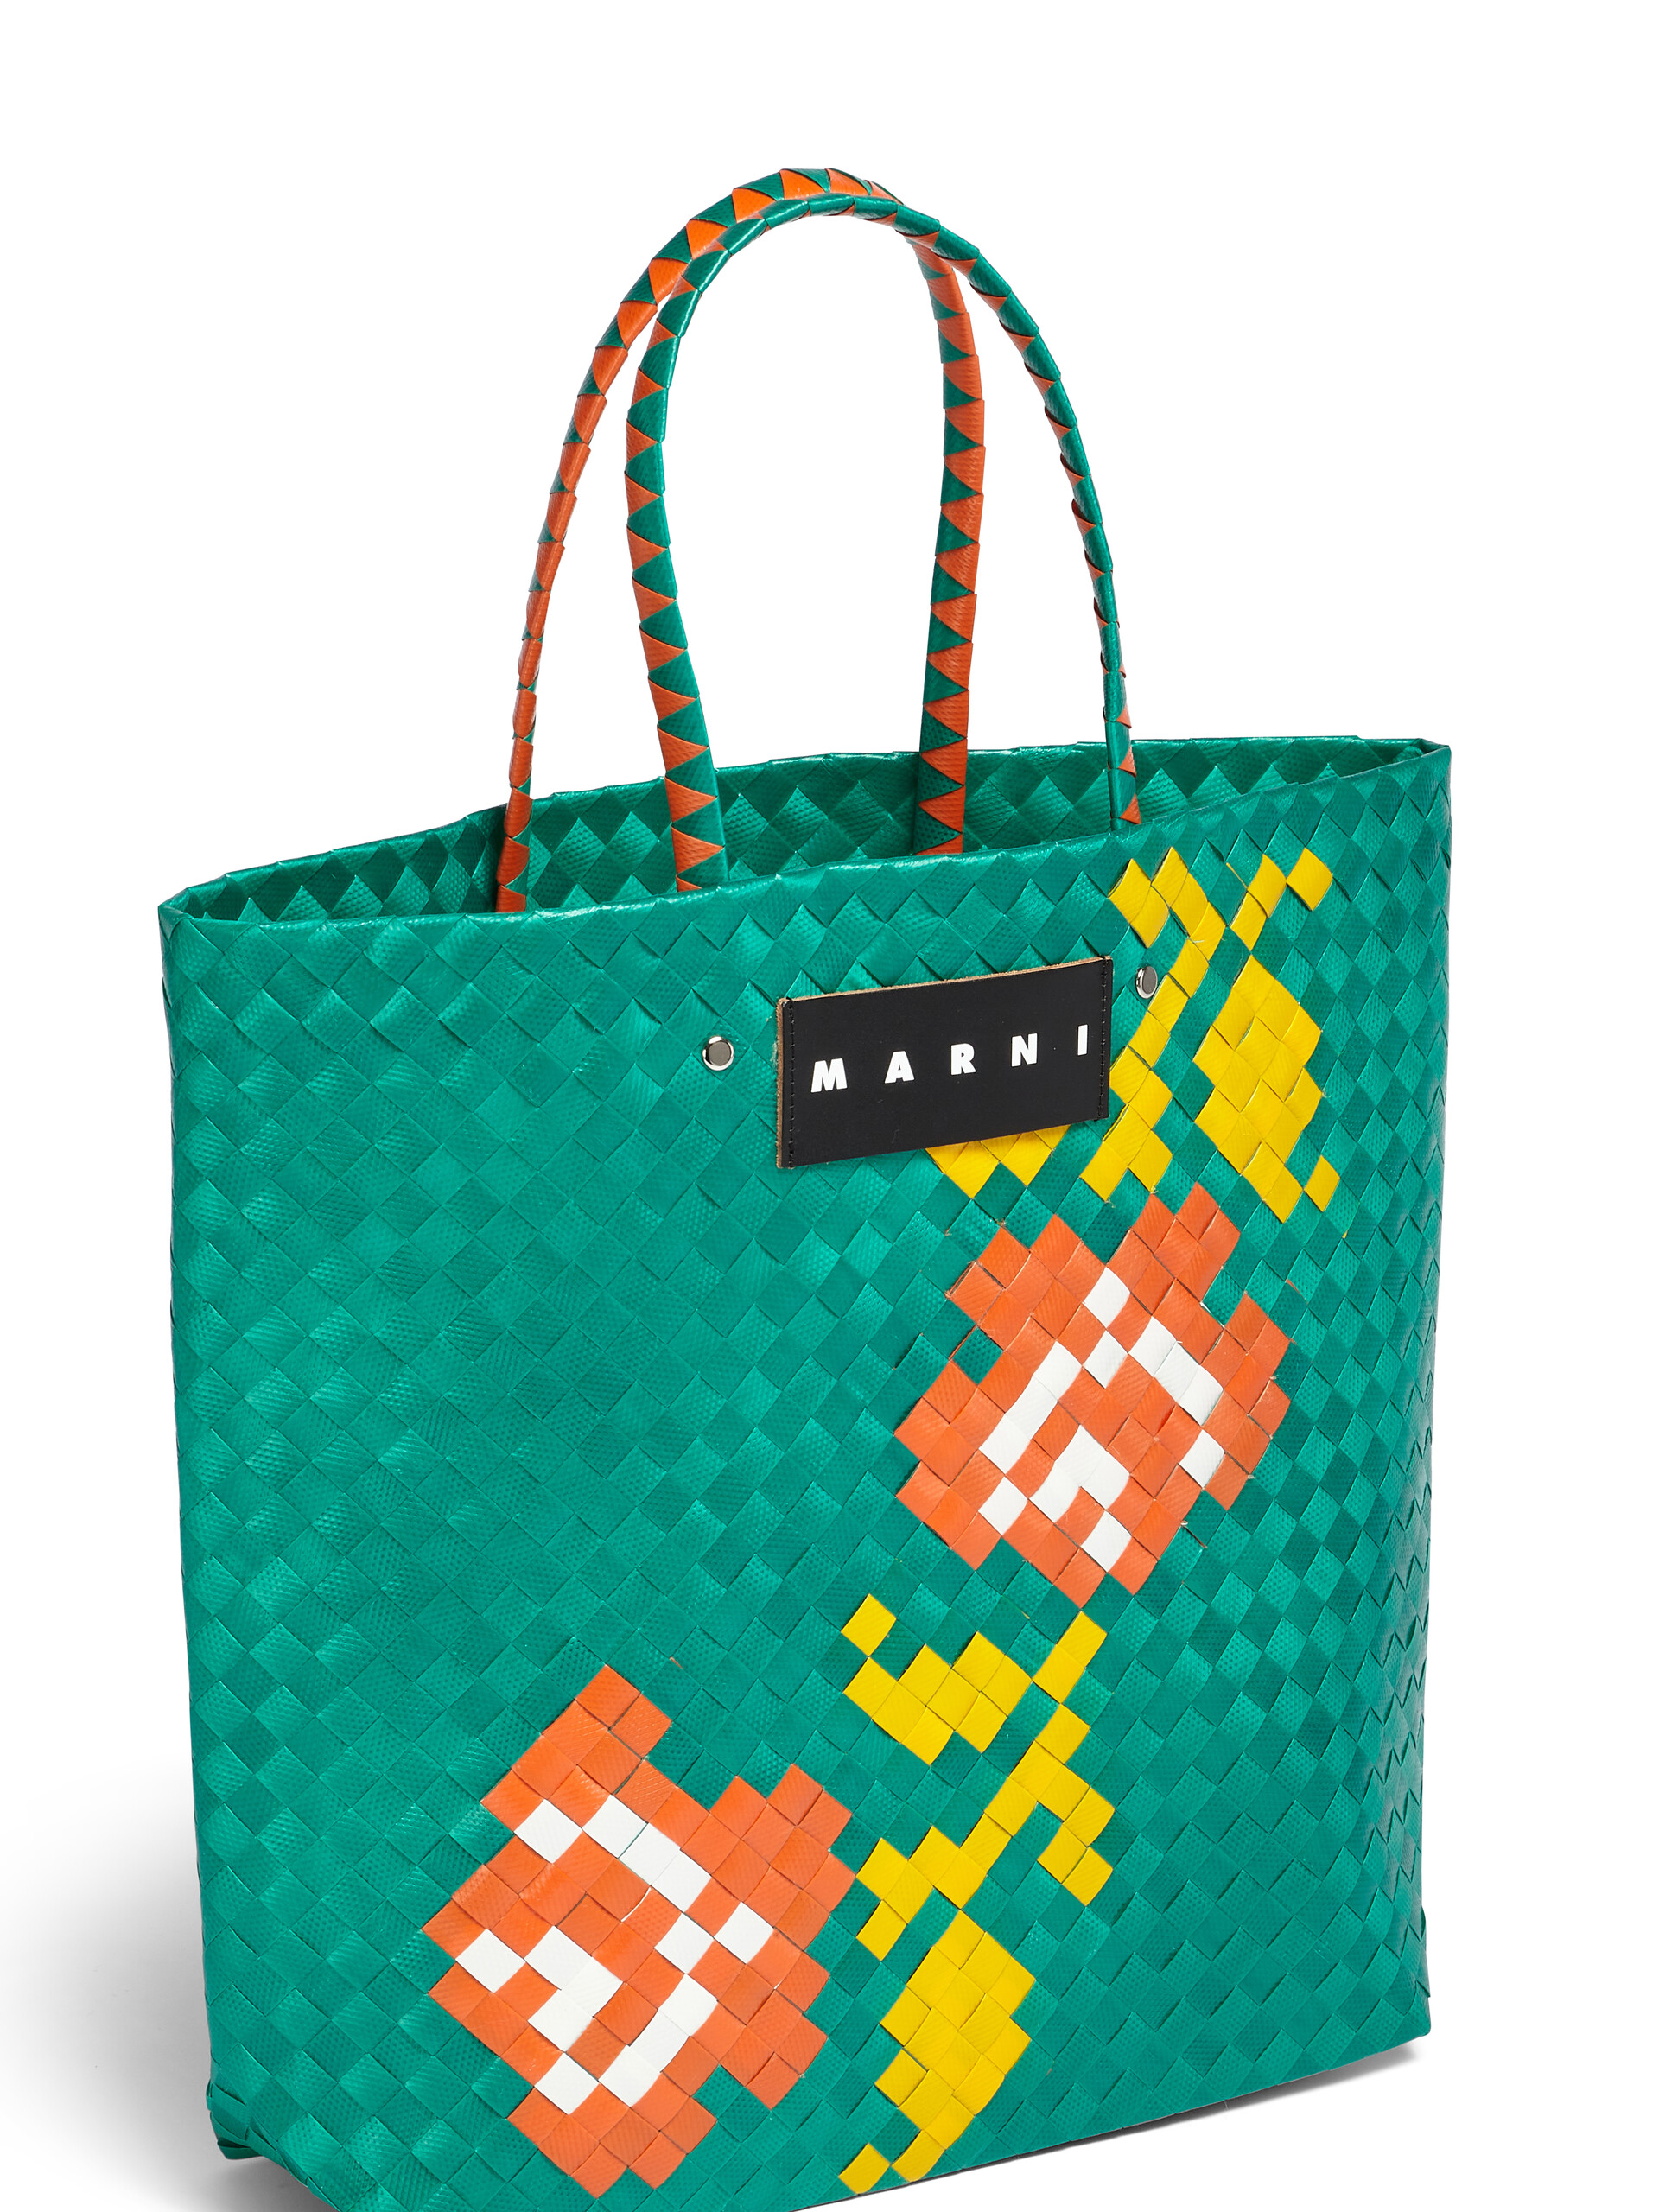 MARNI MARKET BORA medium bag in green flower motif - Bags - Image 4